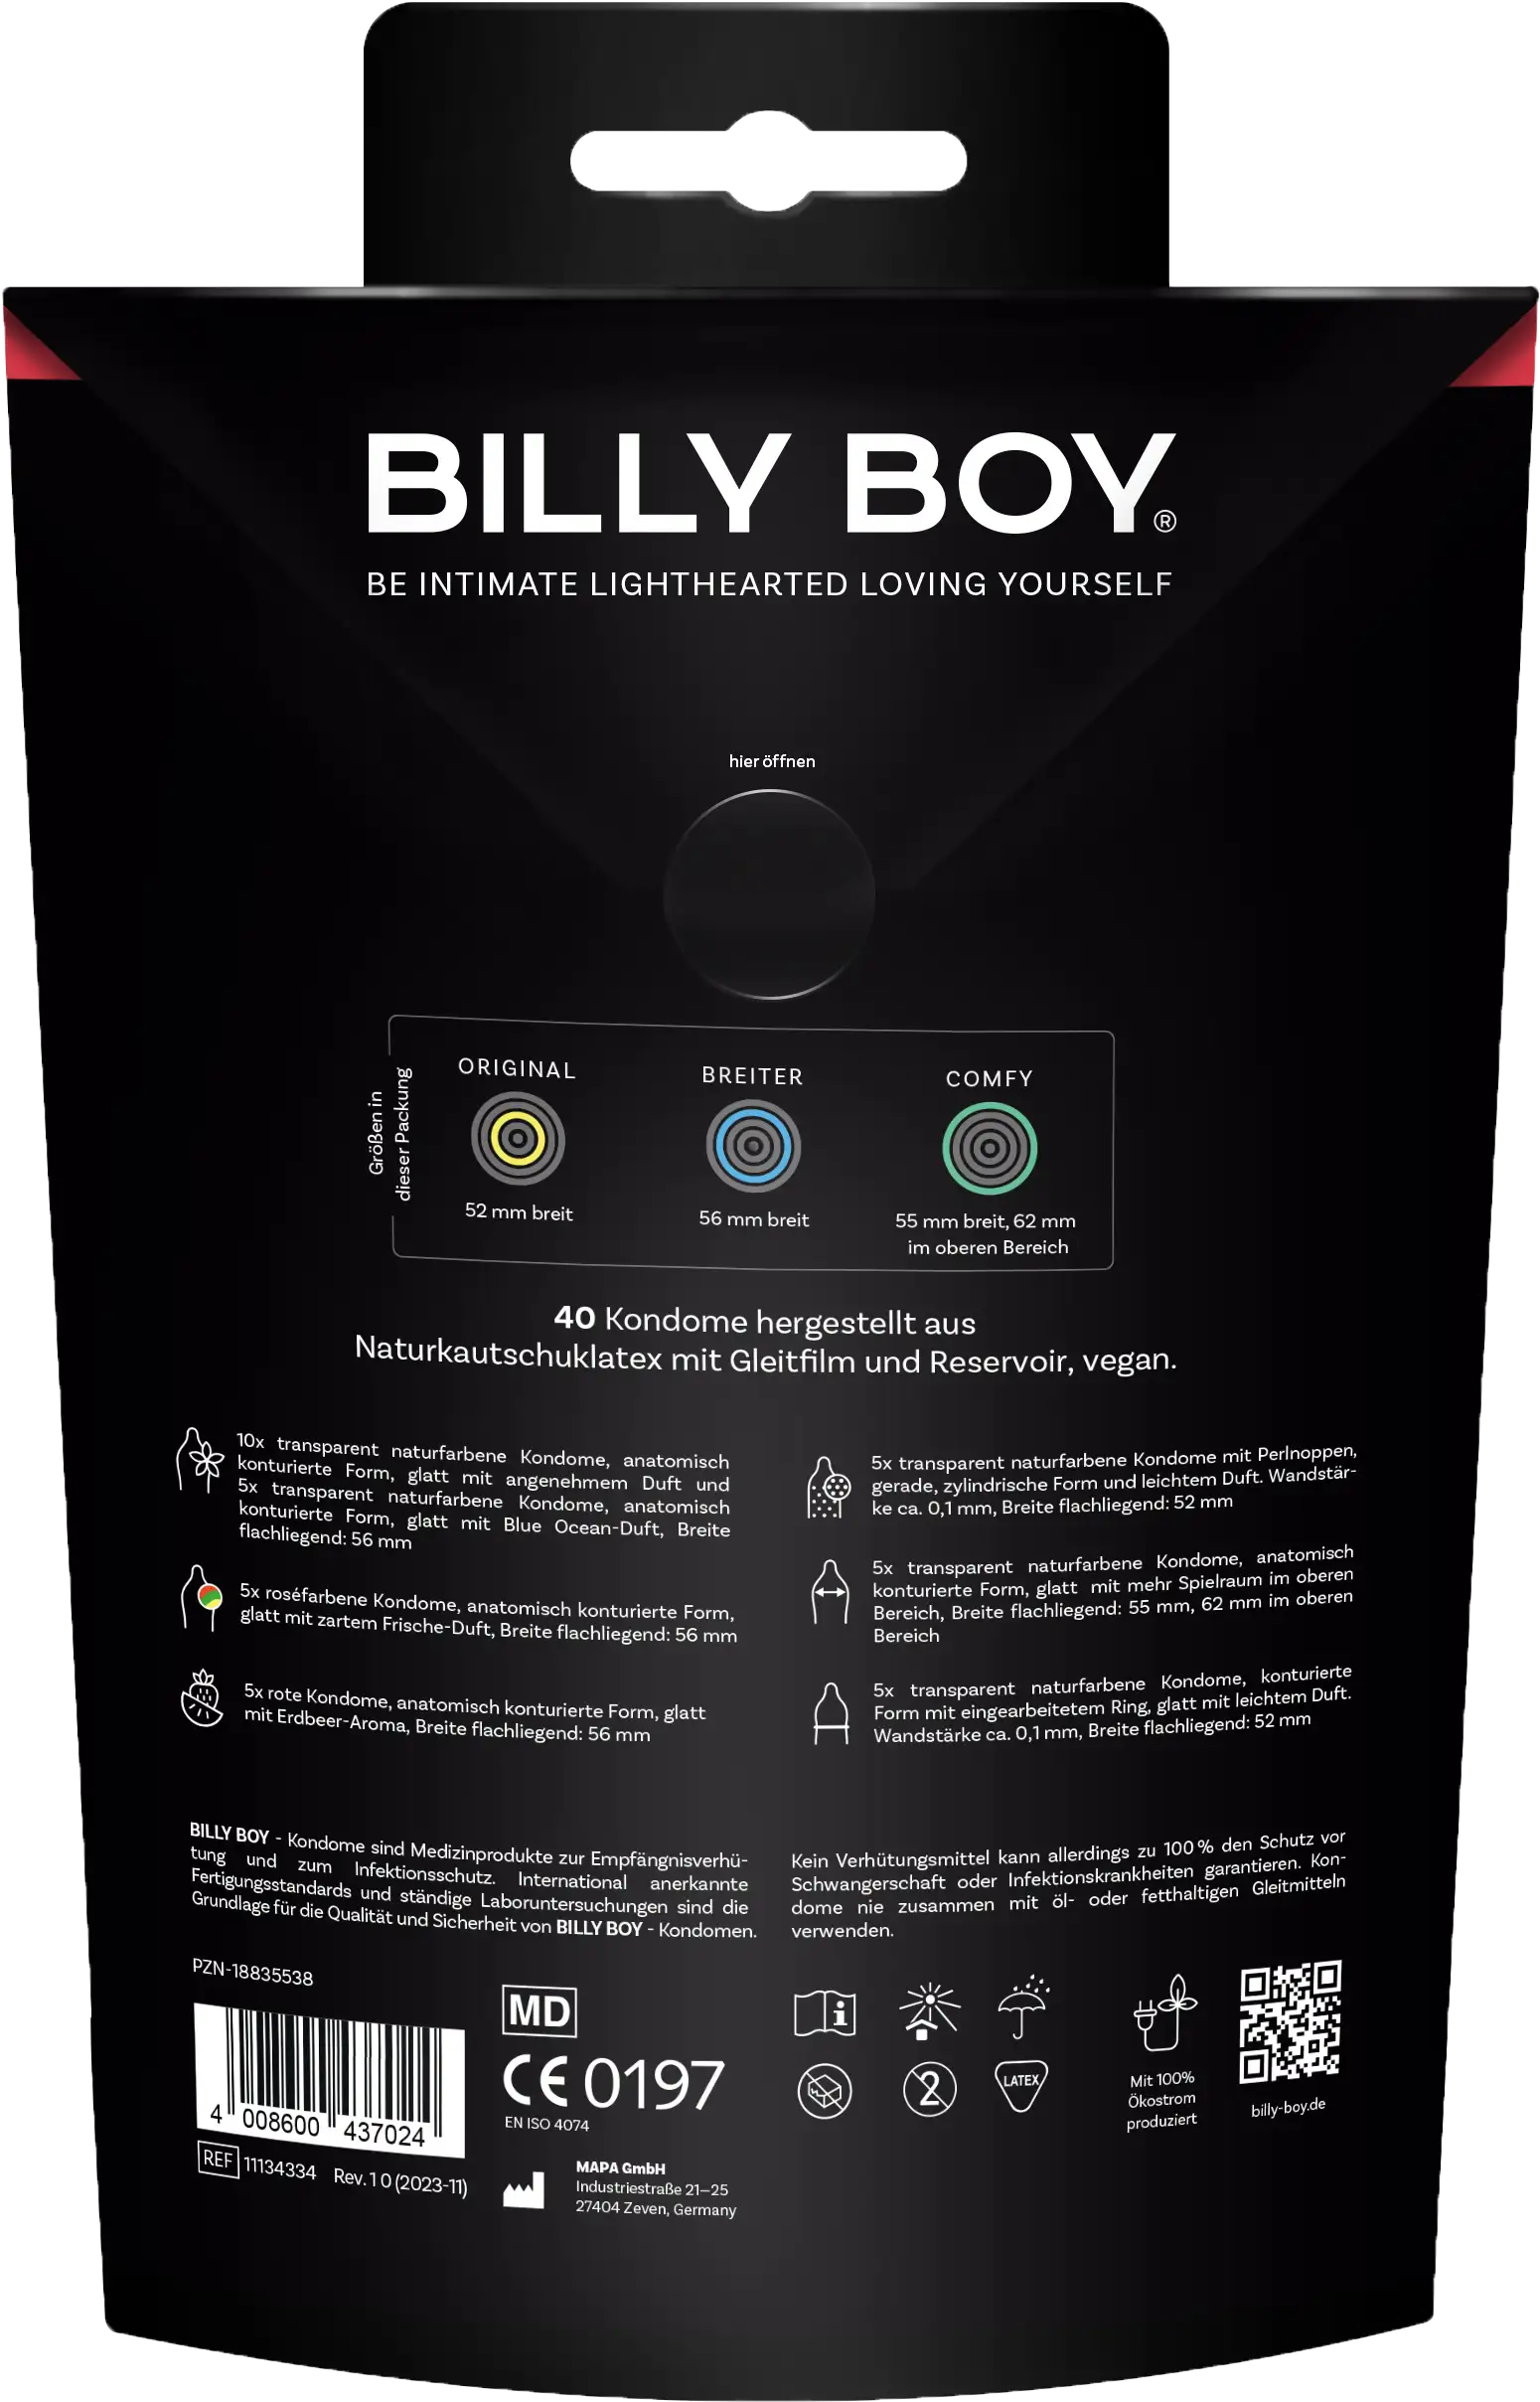 Alles Lust - Kondomtüte der Marke BILLY BOY